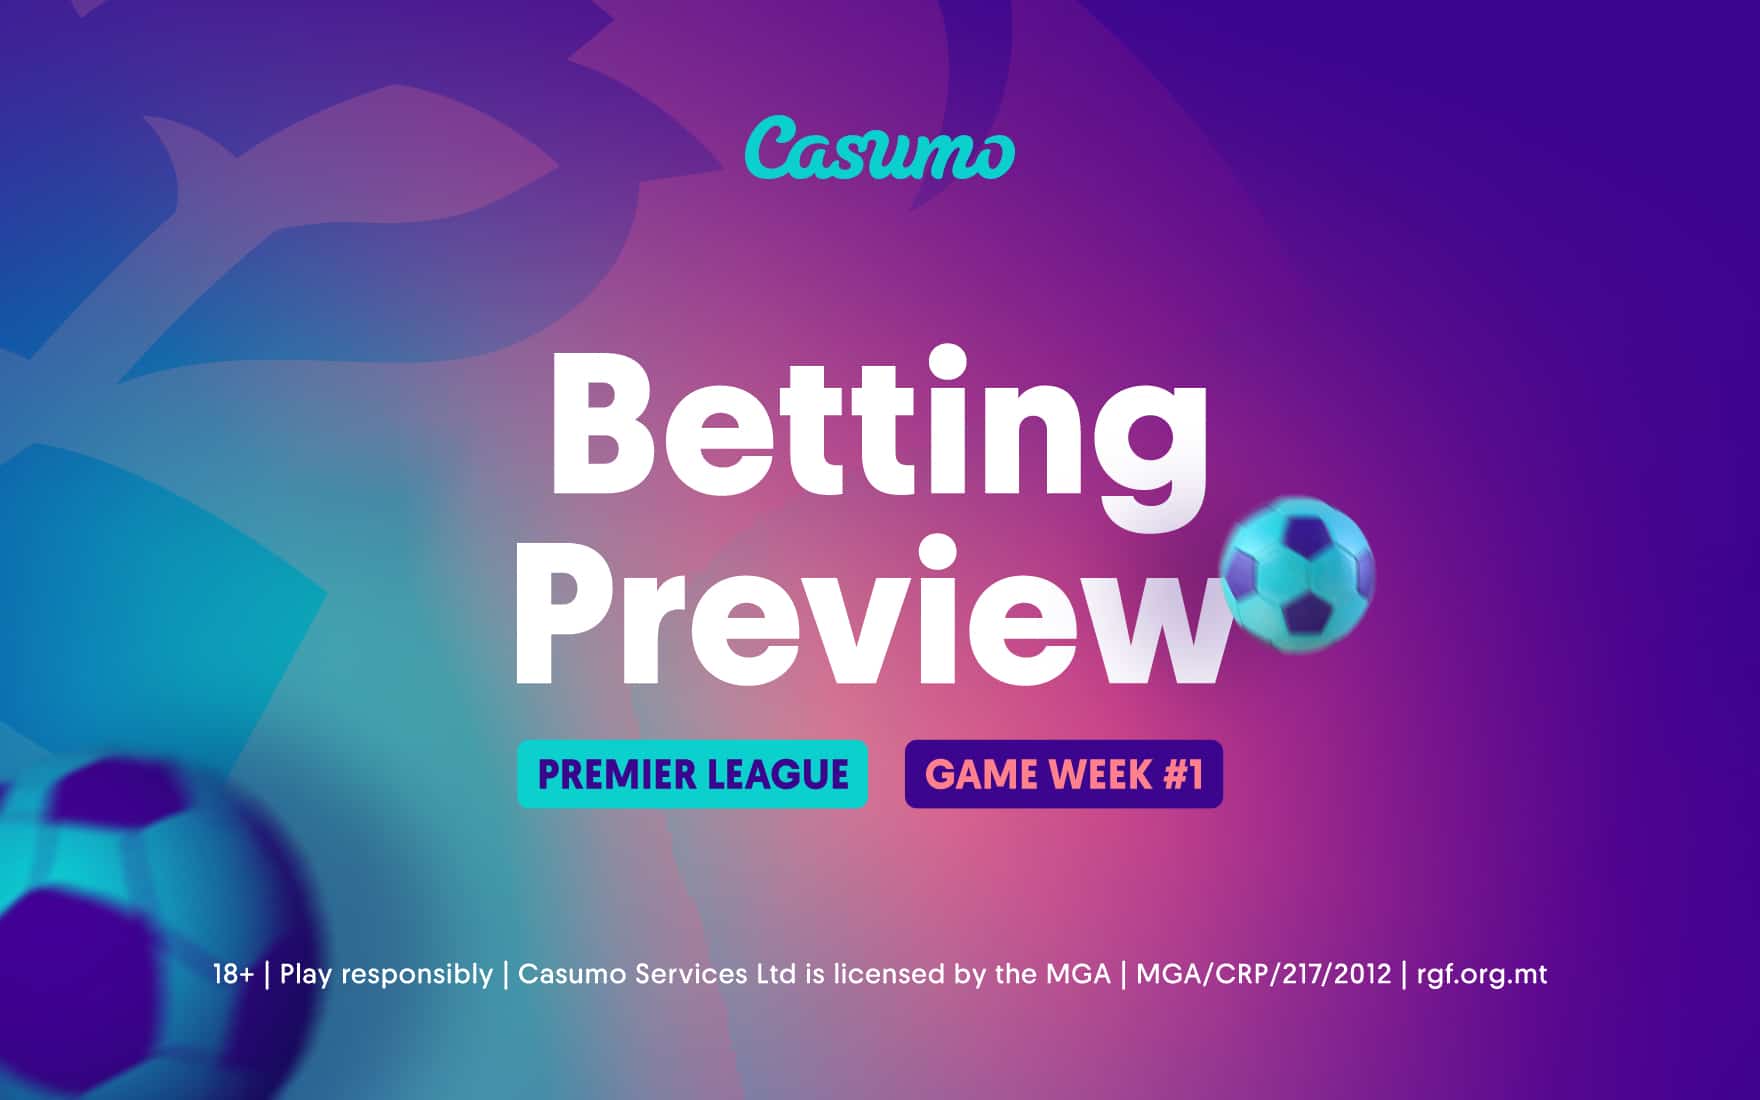 Premier League Betting Review Week 1 Casumo|Premier League Betting Preview Casumo 2020